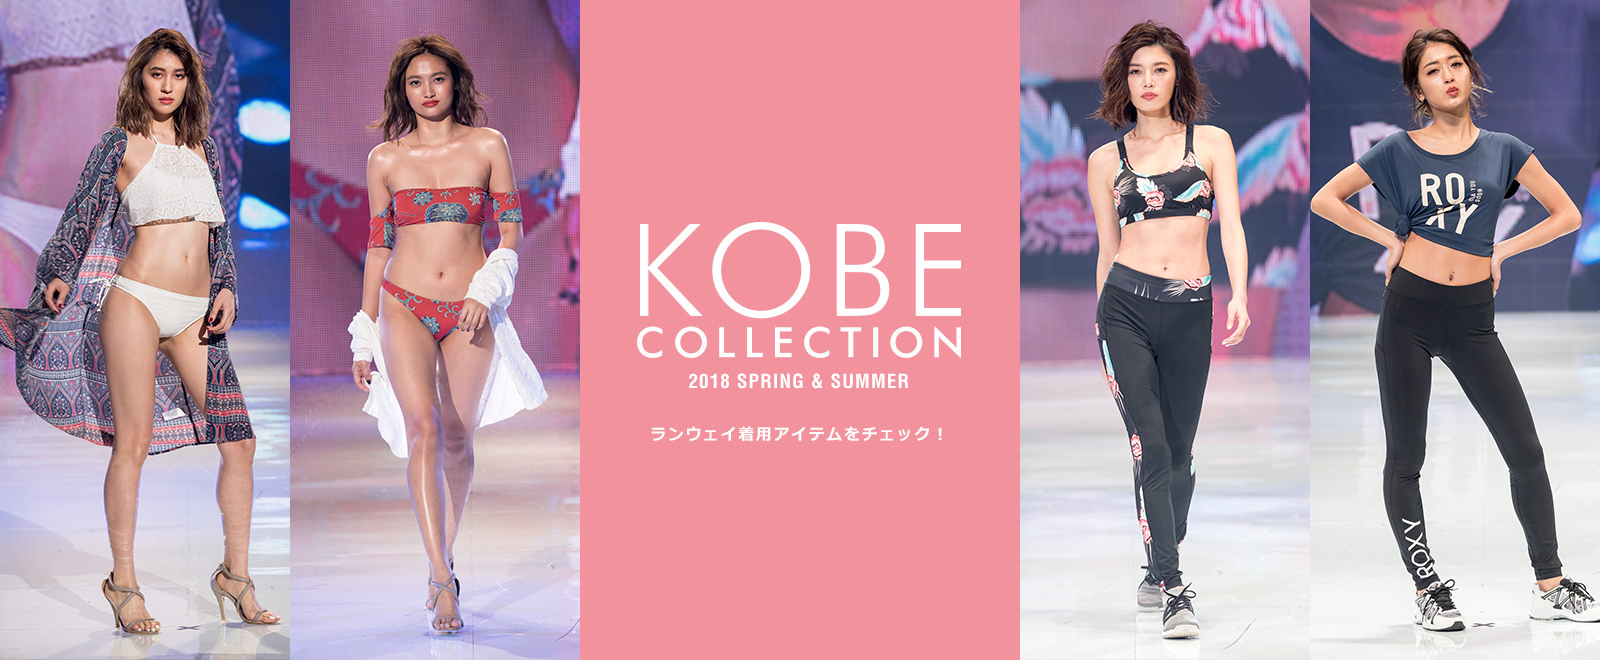 RX 2018 Kobe banner